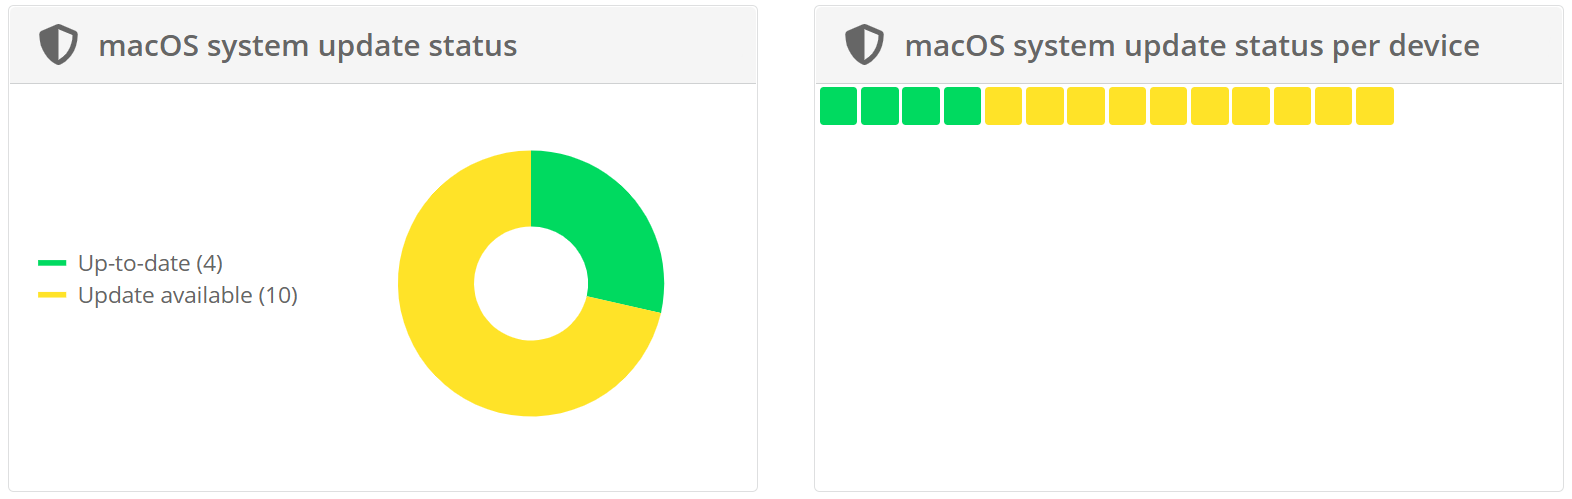 dashboard widgets for macOS OS status